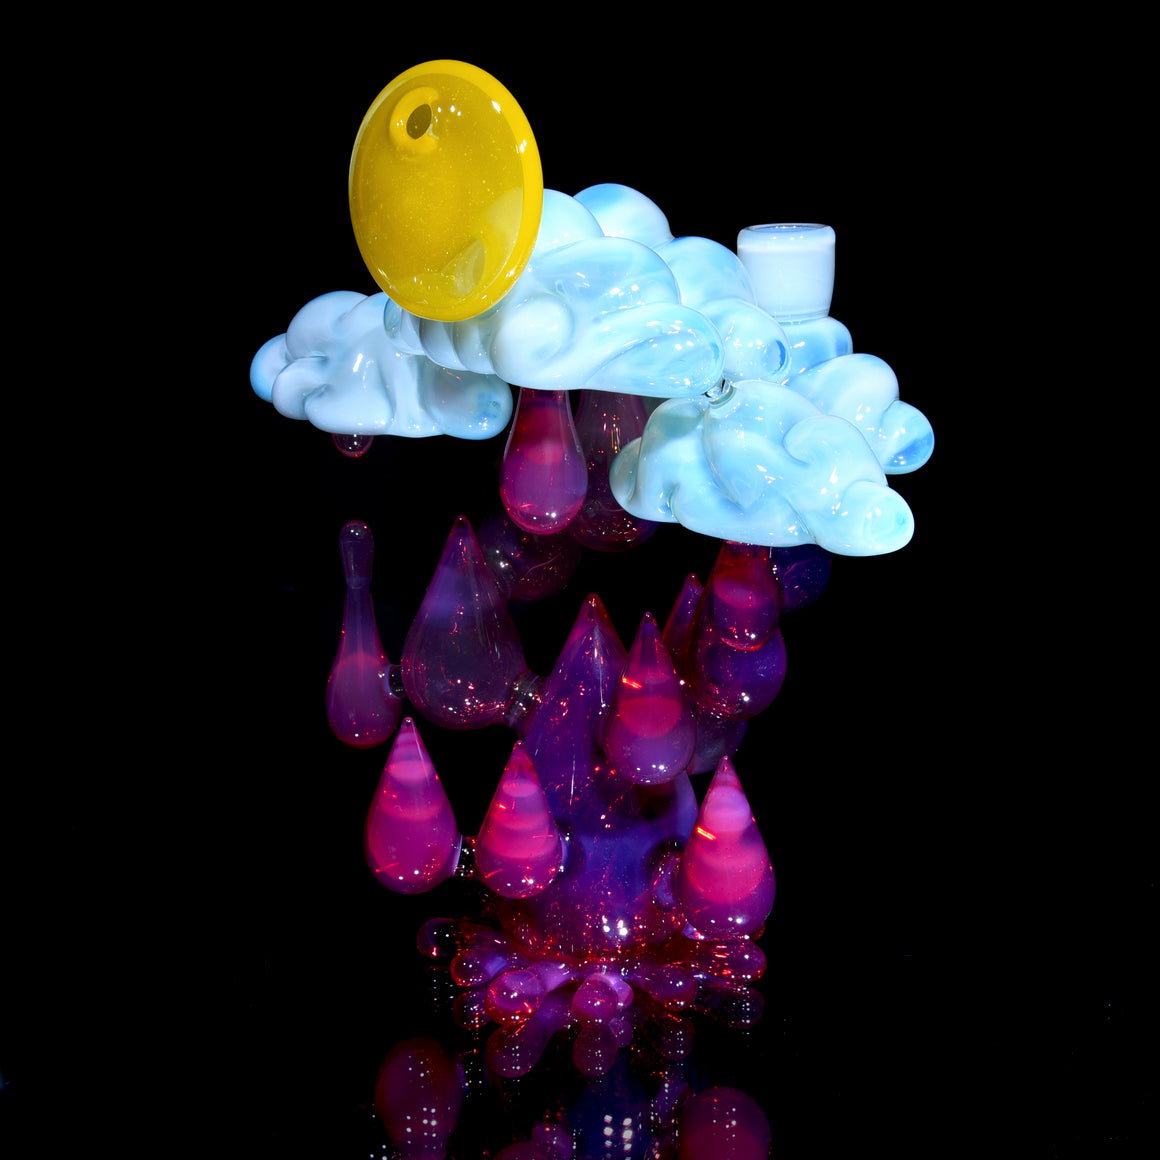 Aquamania Clouds & Karmaline Raindrop Sunset Rig w/ Matching Carb Cap, Slurper Set, & Pendant - 14mm Female